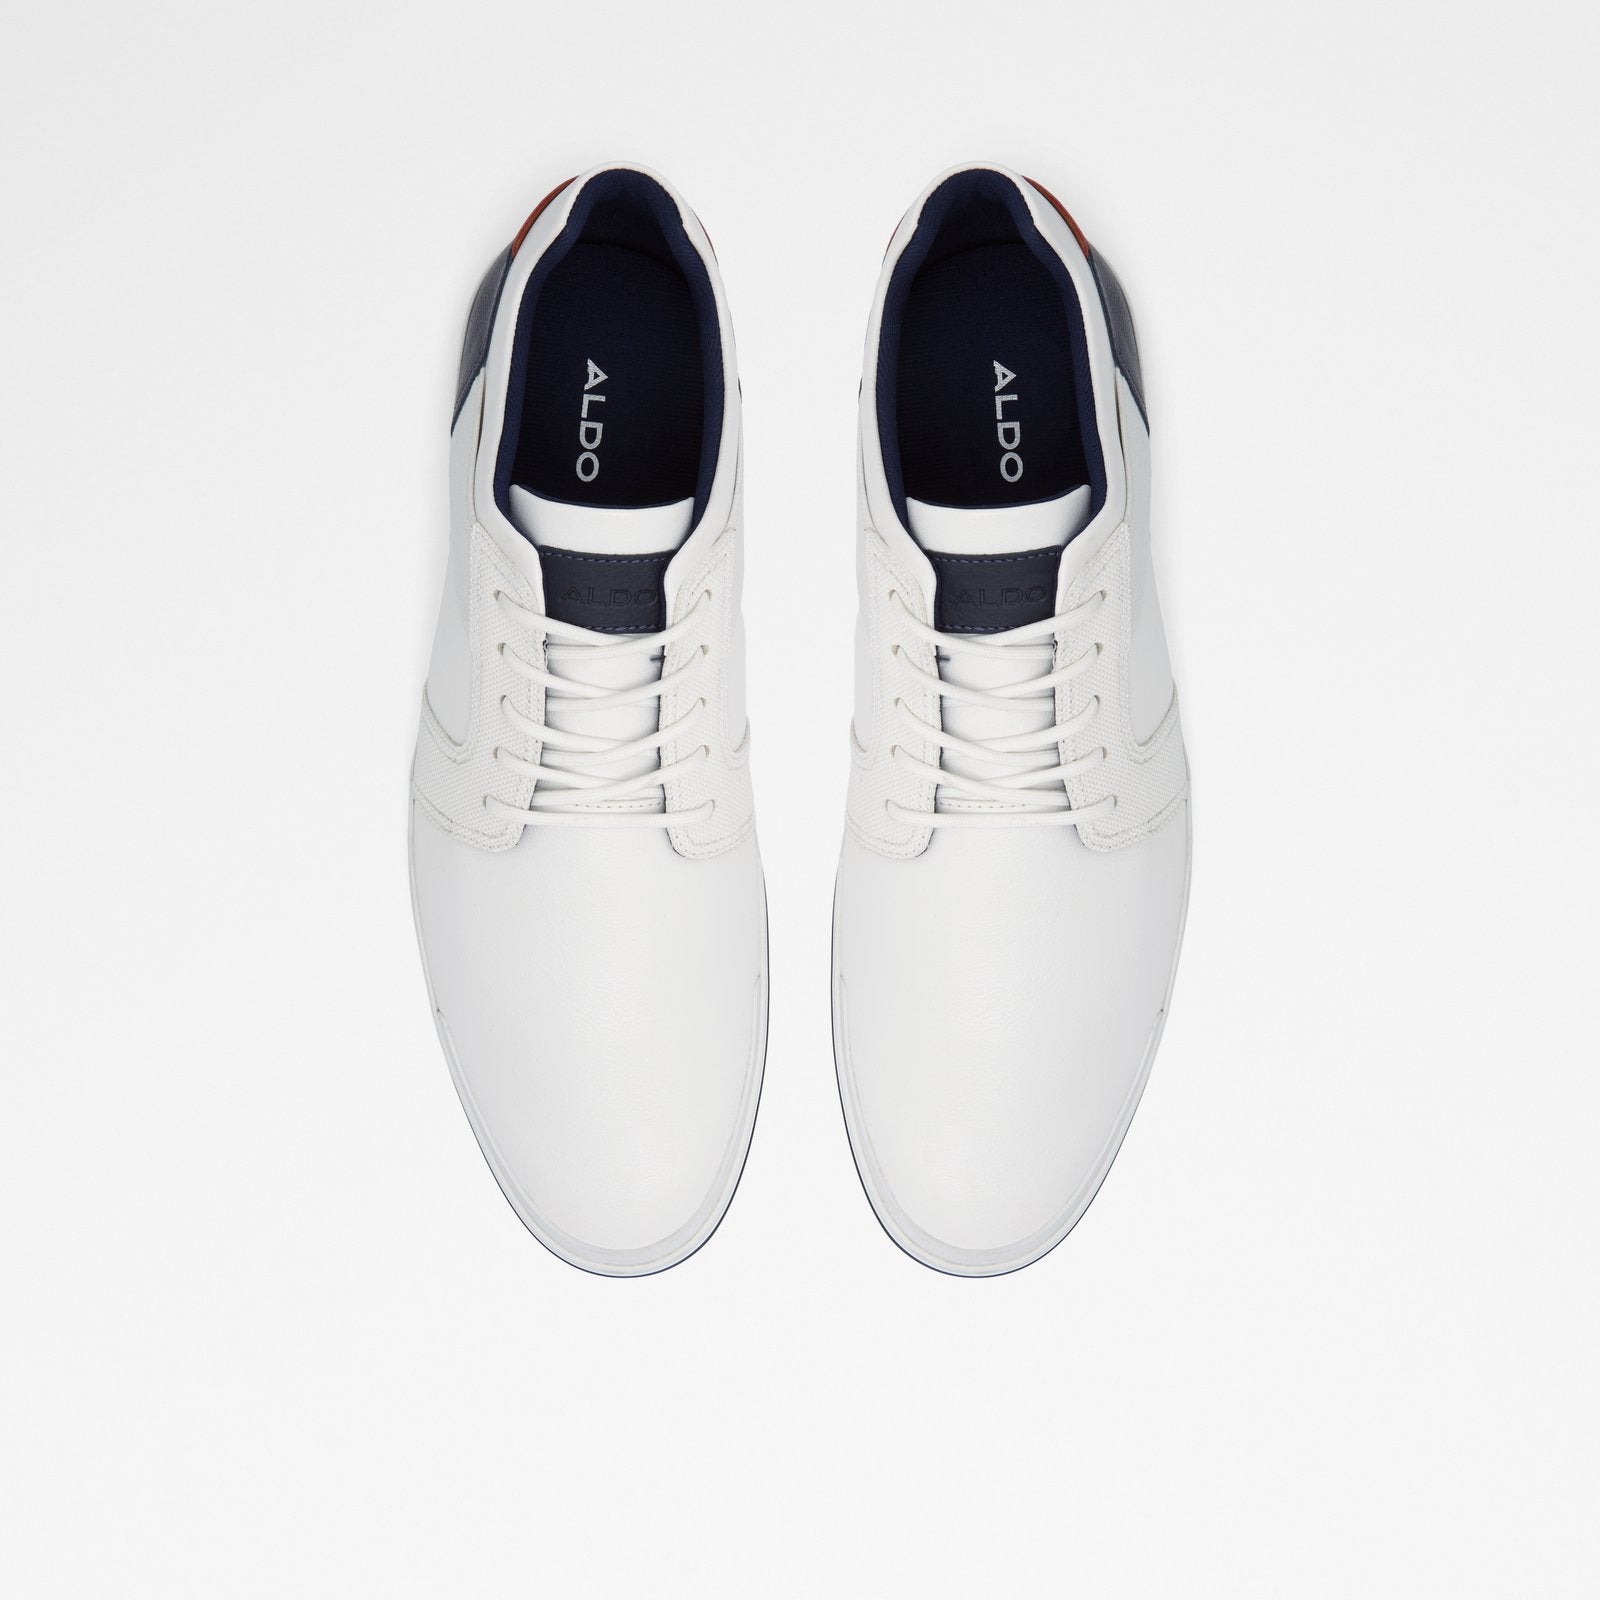 Sevoiwiel Men Shoes - White - ALDO KSA